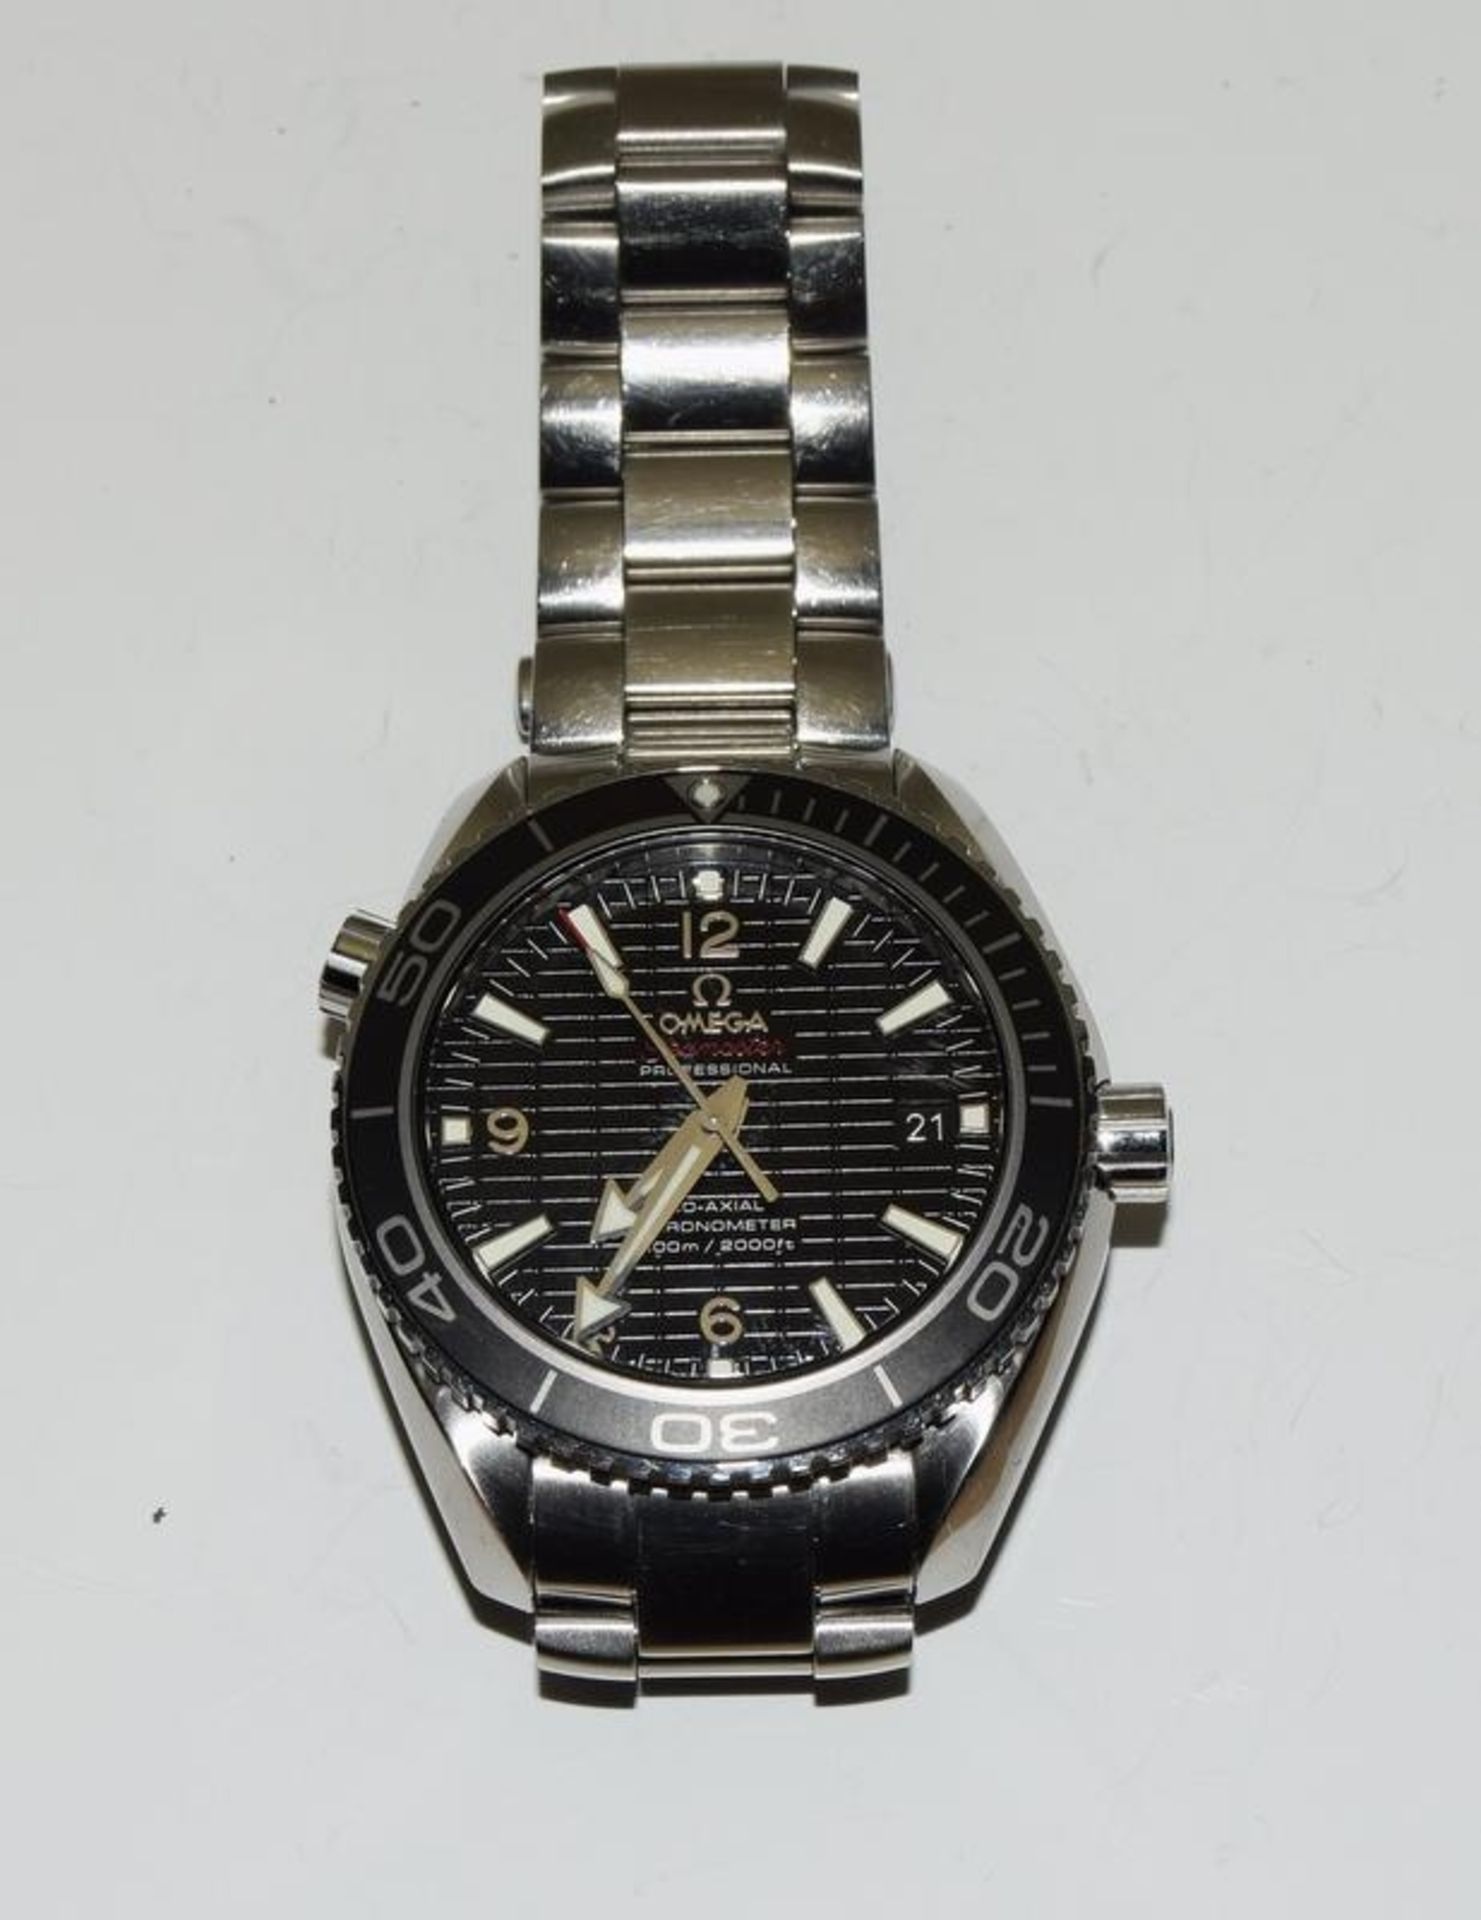 James Bond Skyfall Omega Planet Ocean Limited Edition 0778/5007 wrist watch, 42mm diameter, 2012 - Image 8 of 10